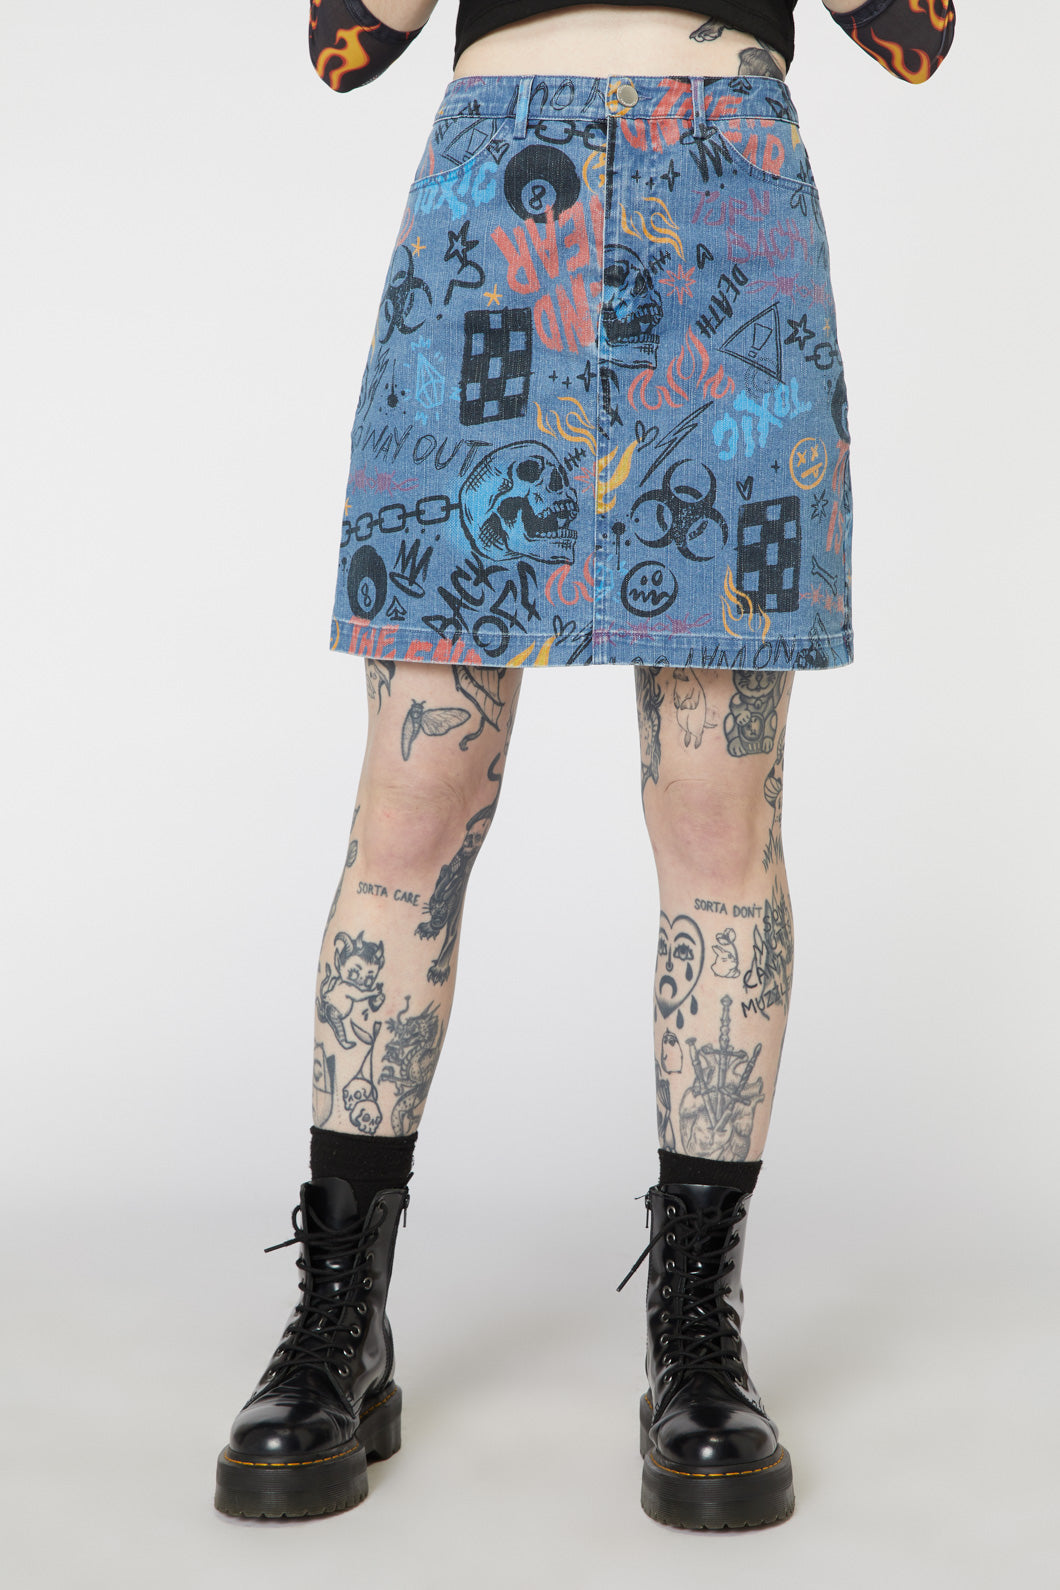 Buy Womens Cartoon Printed Pleated Skirts Graffiti ALine Skirt Vintage  Skirts at Amazonin